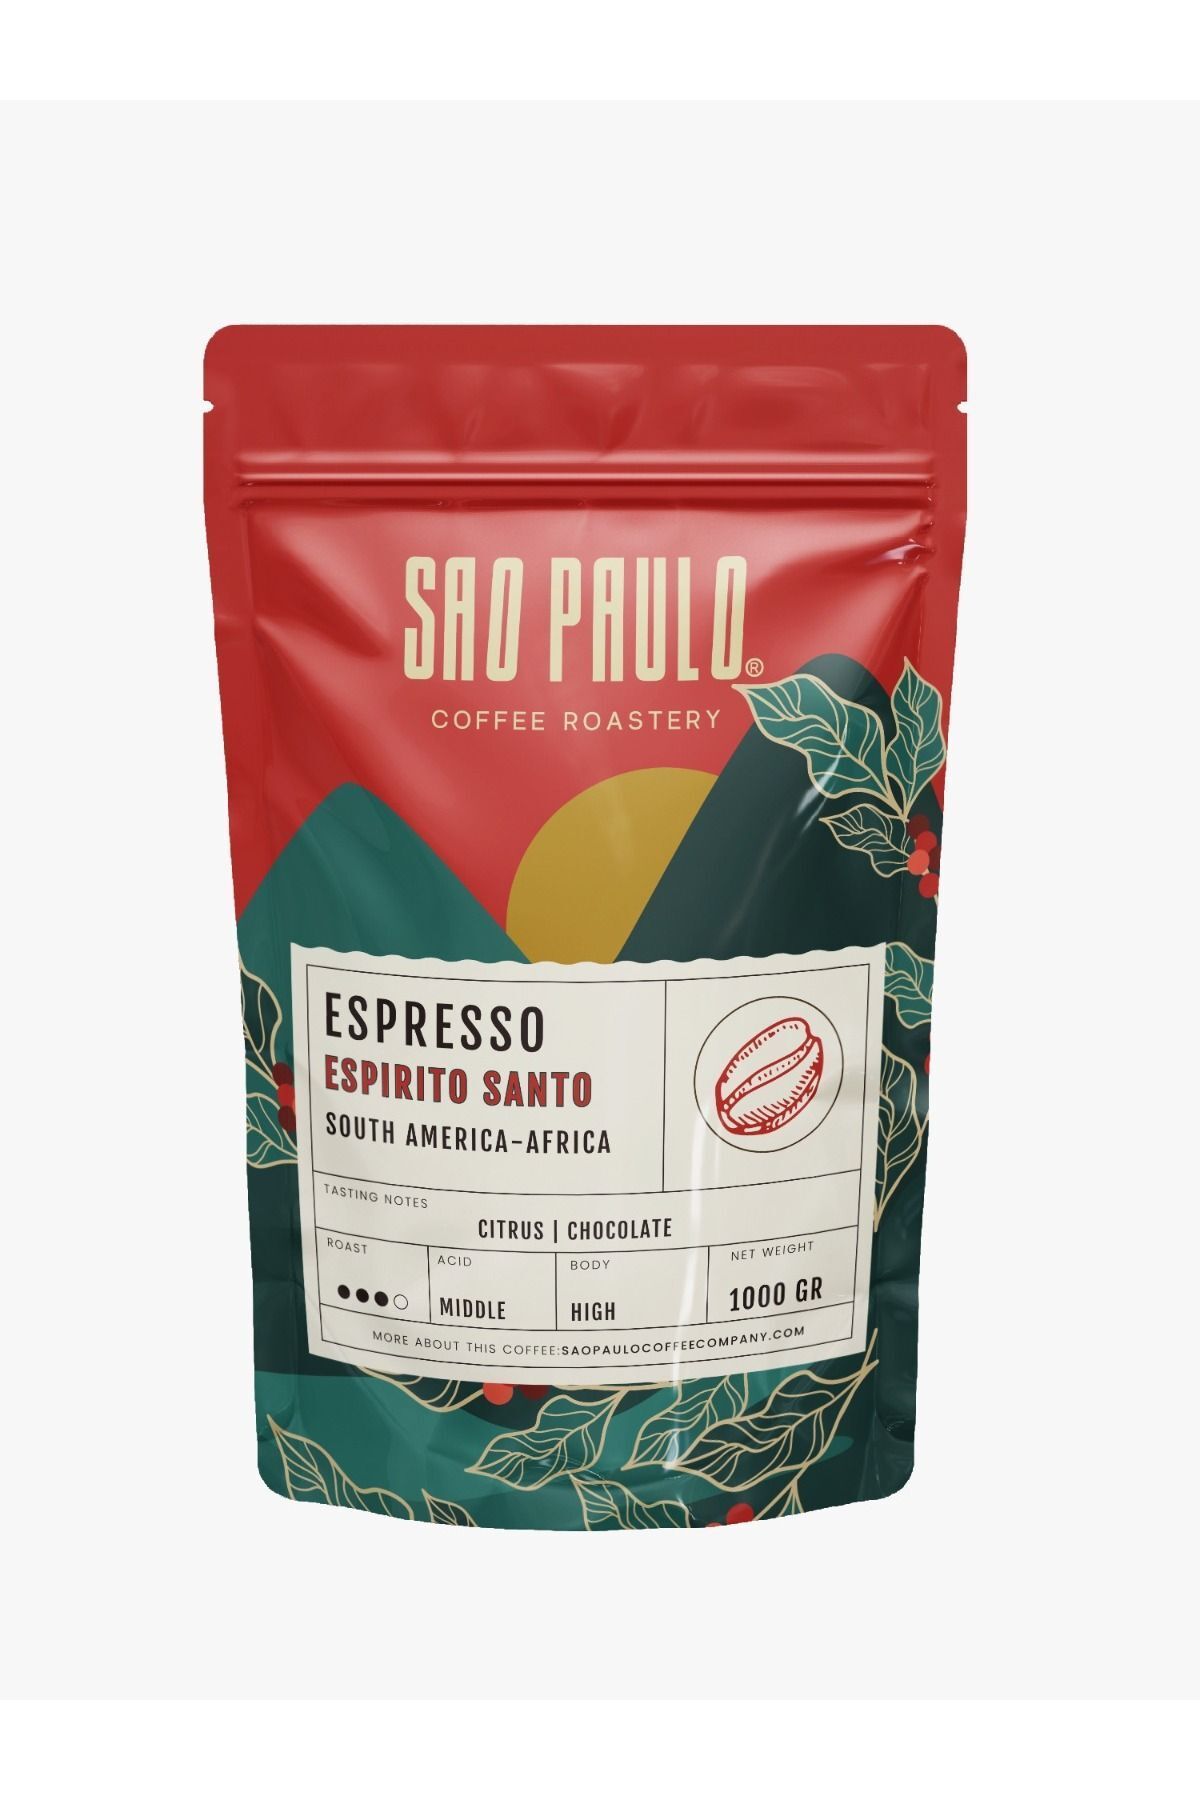 Sao Paulo Coffee Sao Paulo Espirito Santo Espresso 1000 Gram